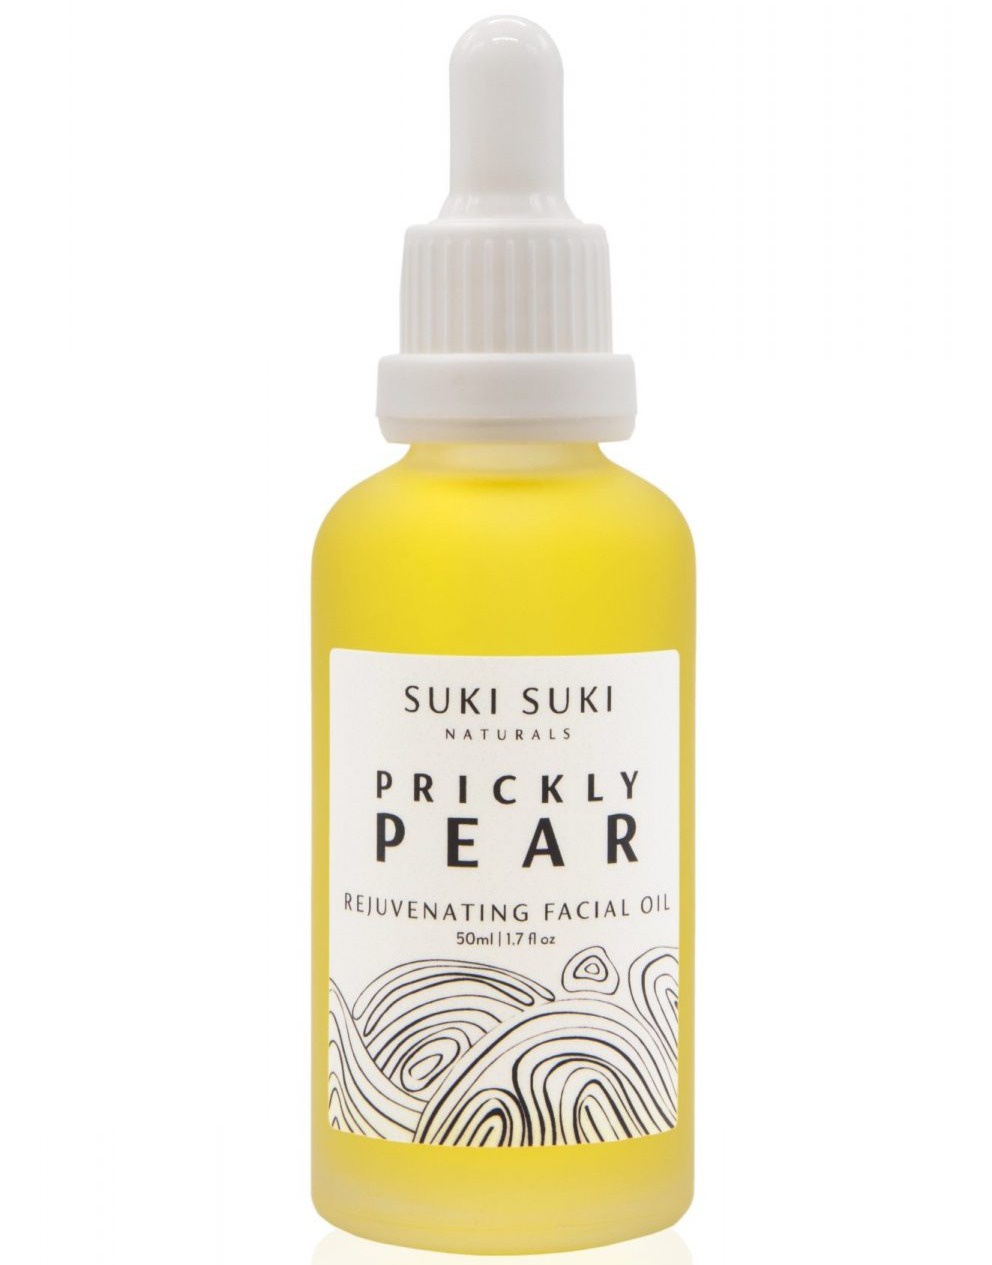 Suki suki Prickly Pear Rejuvenating Facial Oil